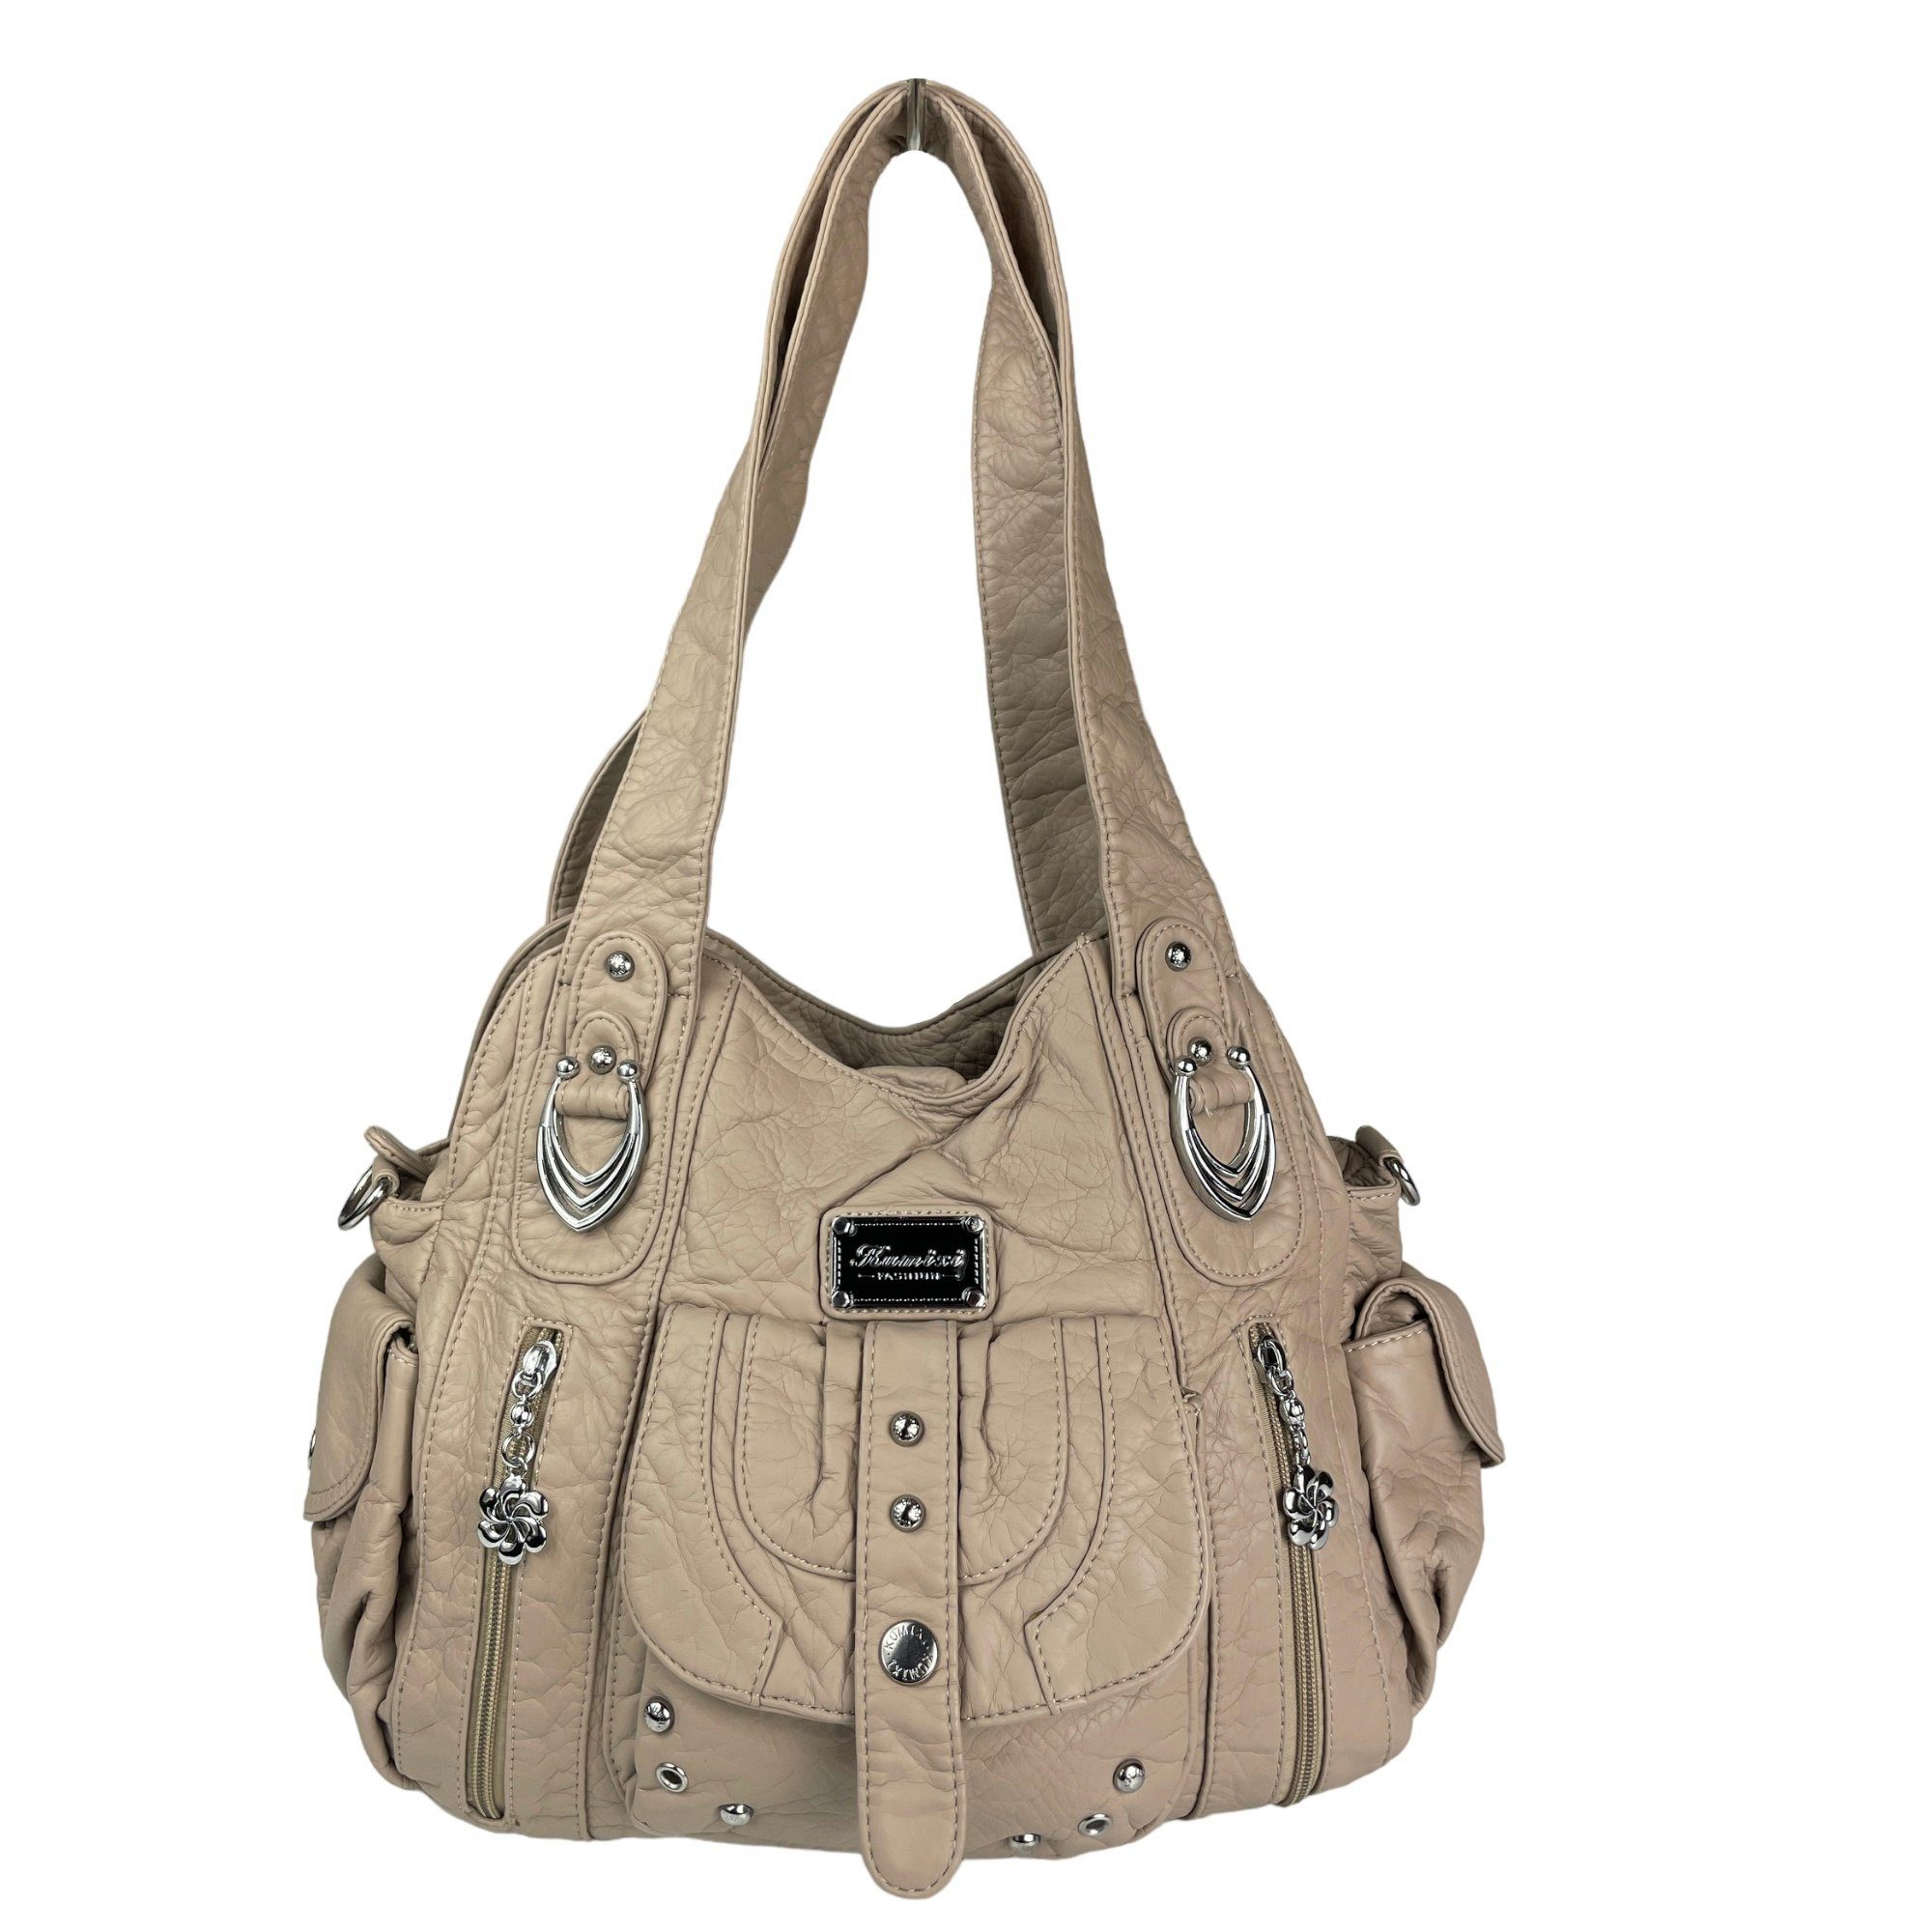 Taschen4life Schultertasche Damen Handtasche AKW22026, lange Tragegriffe & abnehmbarer Schulterriemen, Schultertasche beige | Schultertaschen